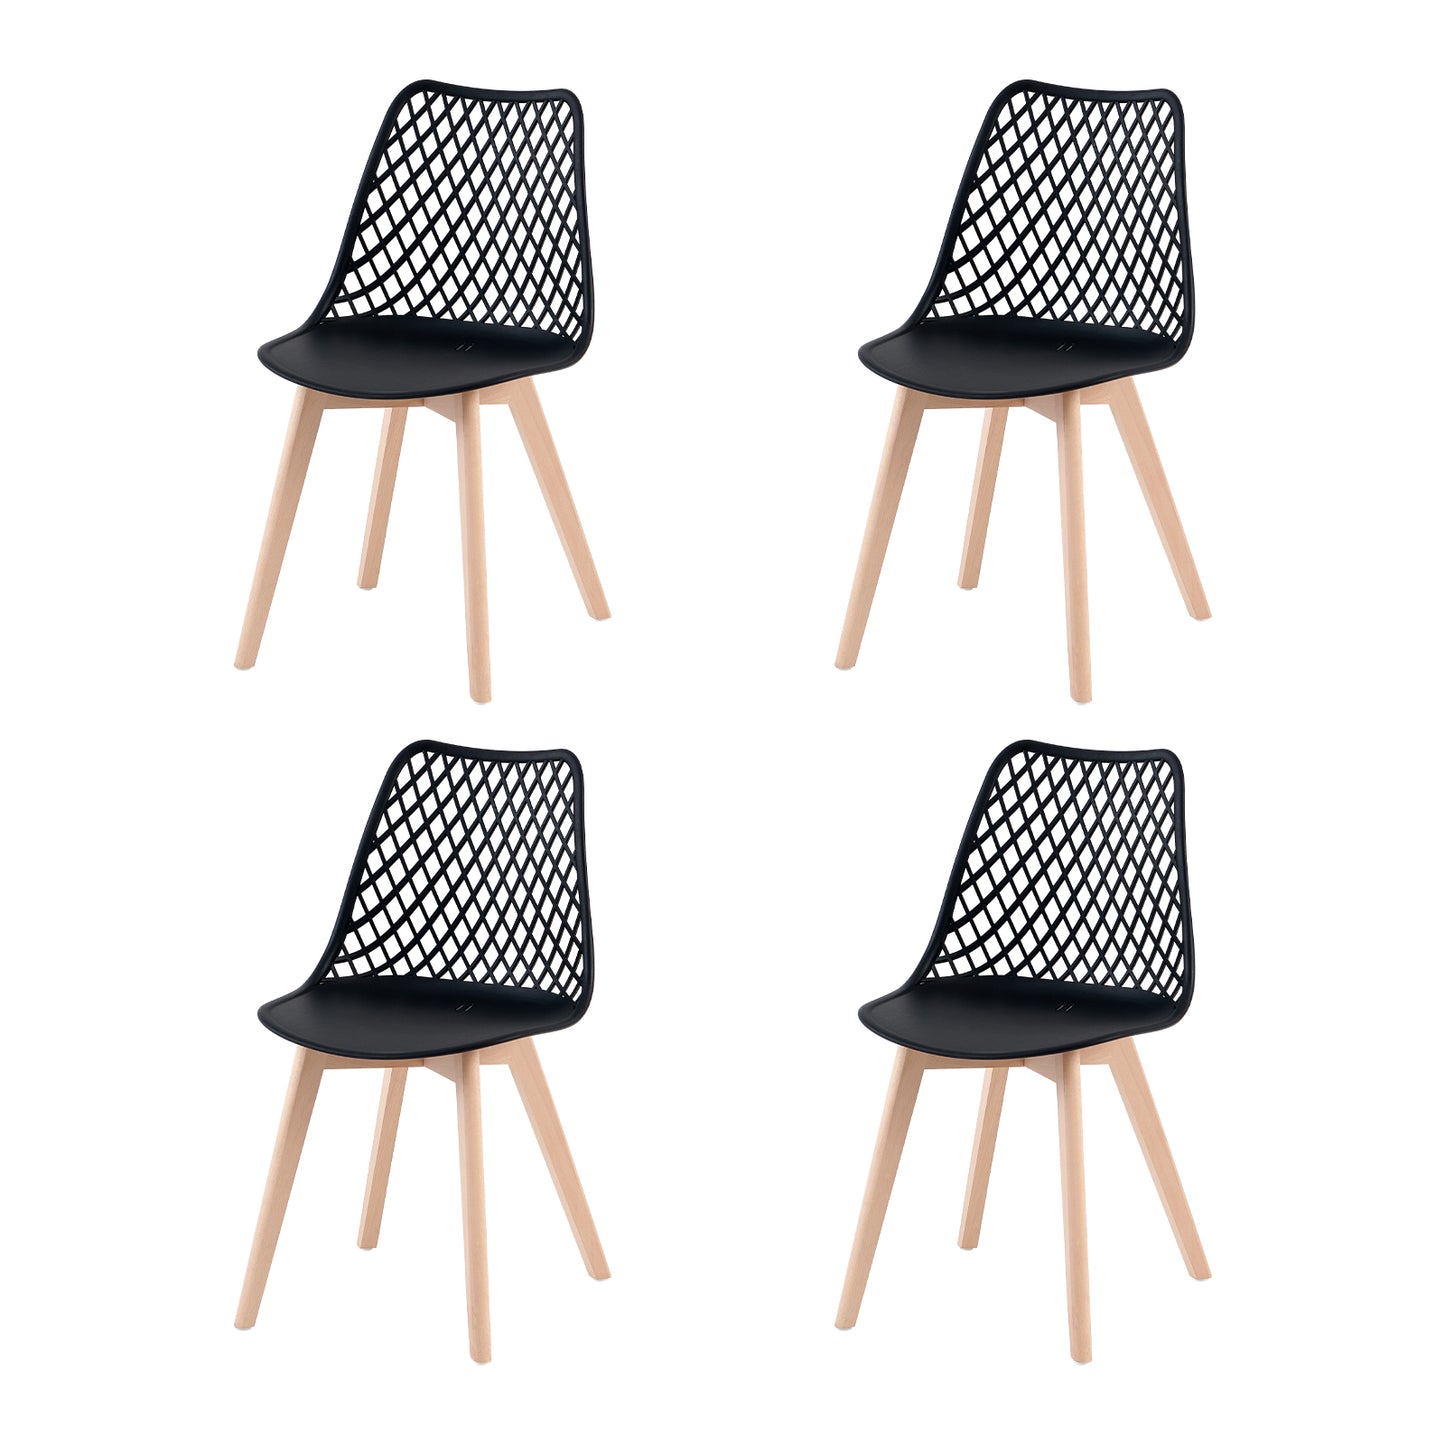 MOLSON Hollow Arm Chair (Set of 4) - Black/Gray/White